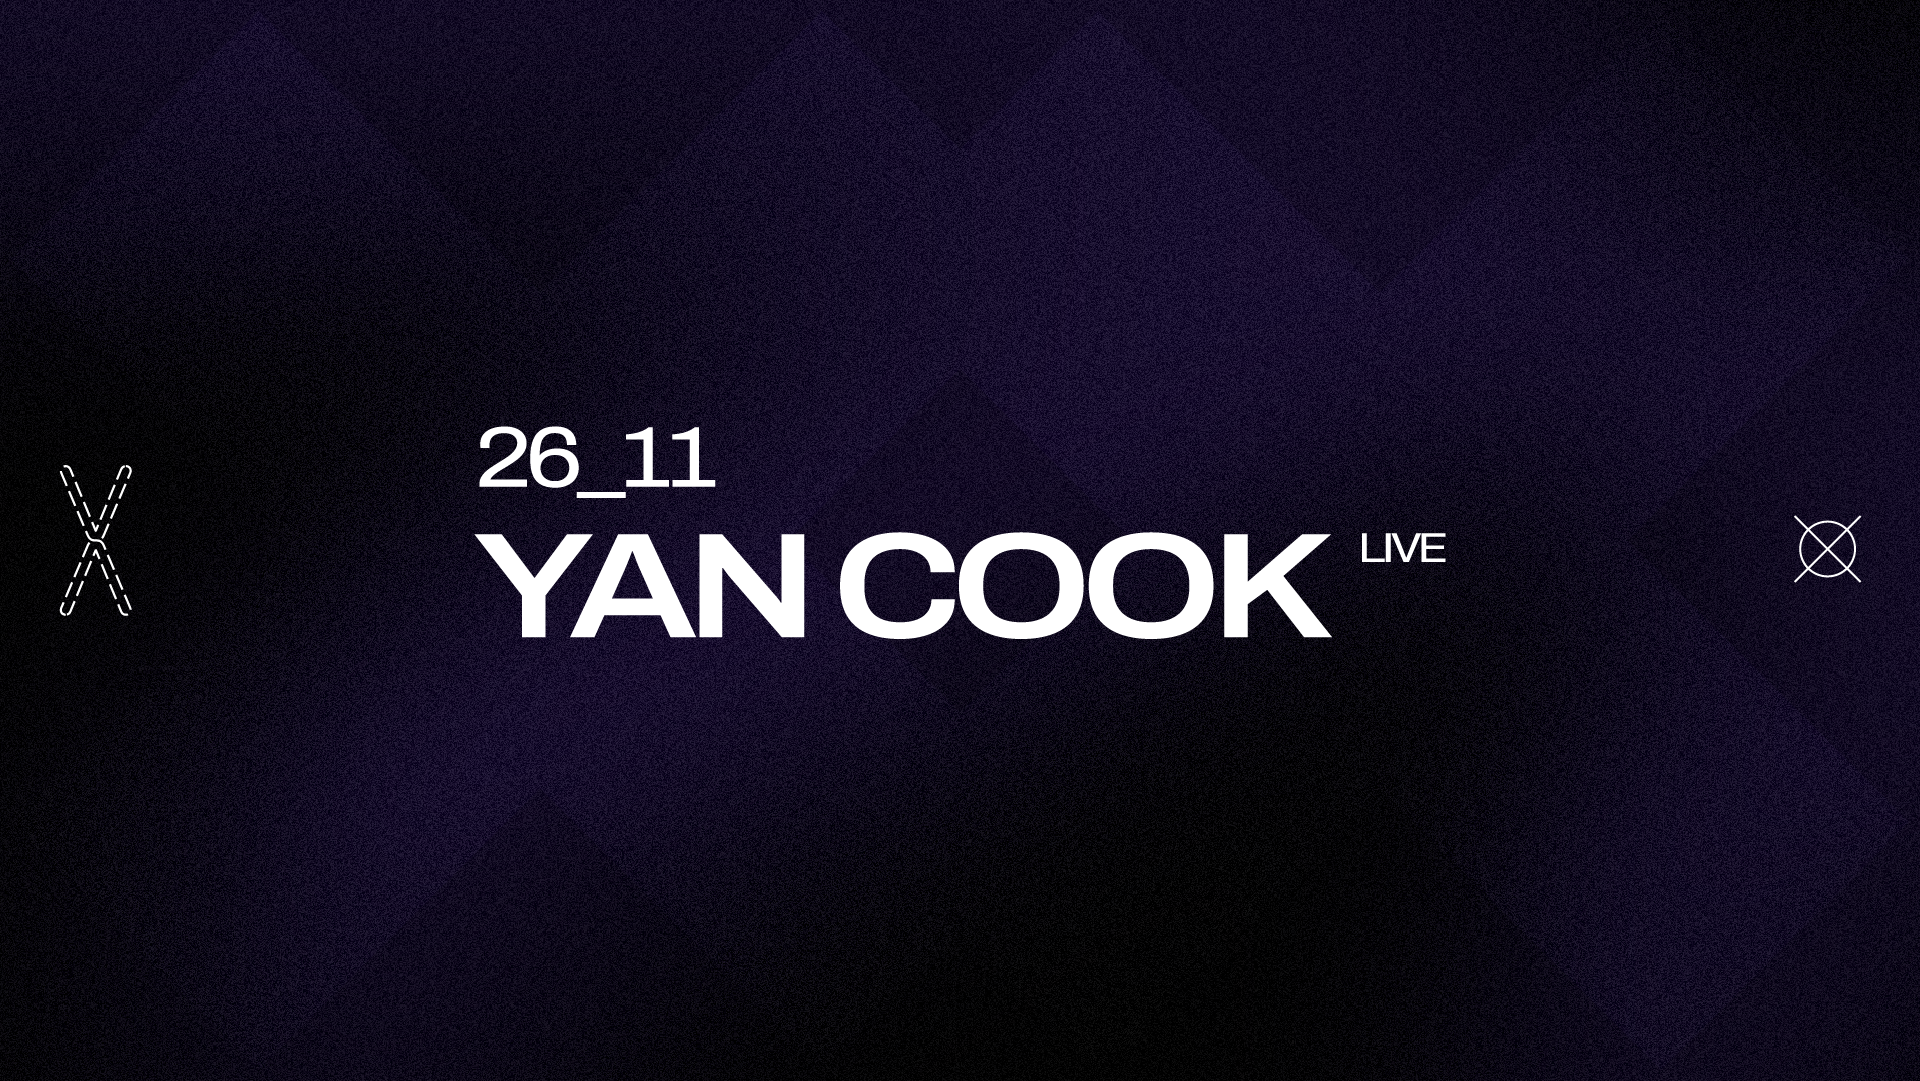 VИDЯPΛSS pres. Yan Cook LIVE - フライヤー表